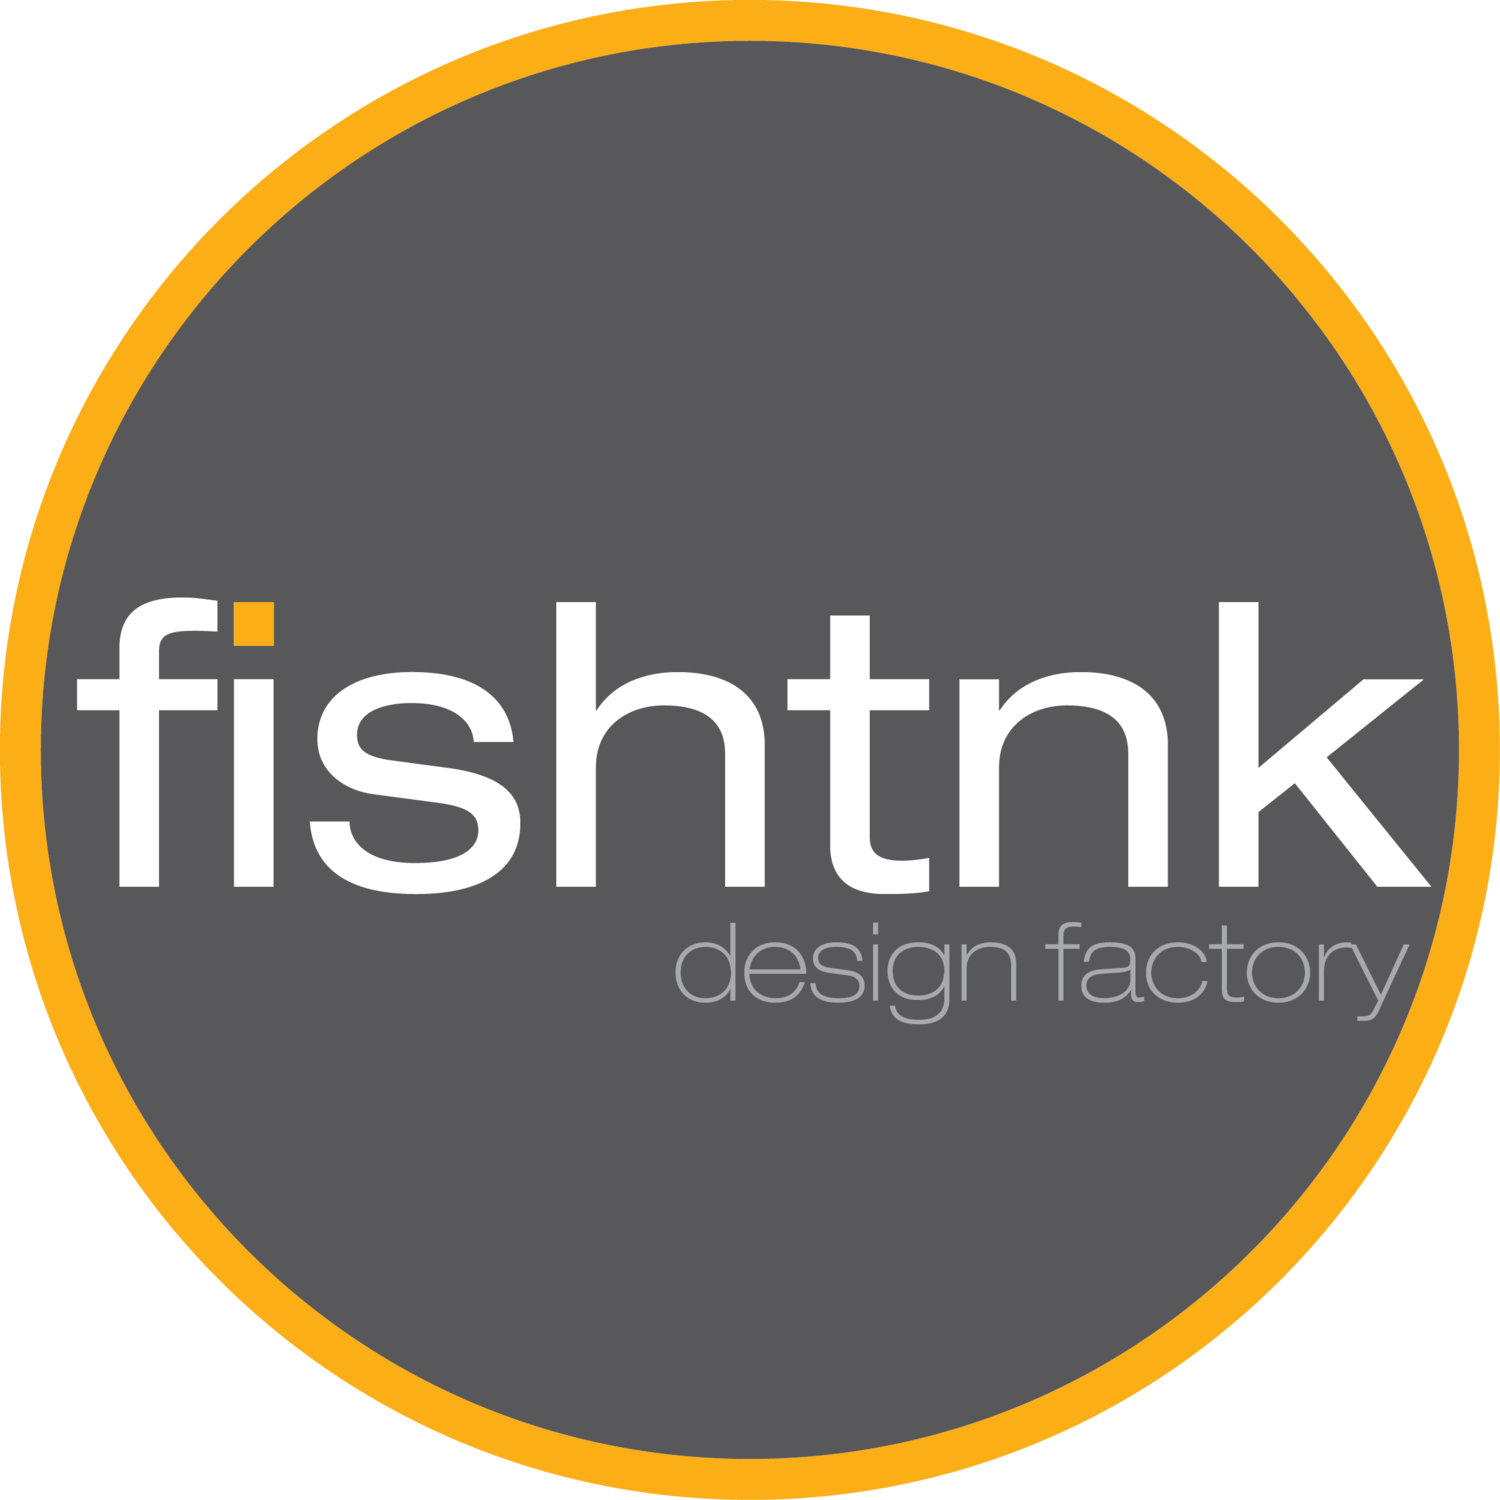 Fishtnk Design Factory